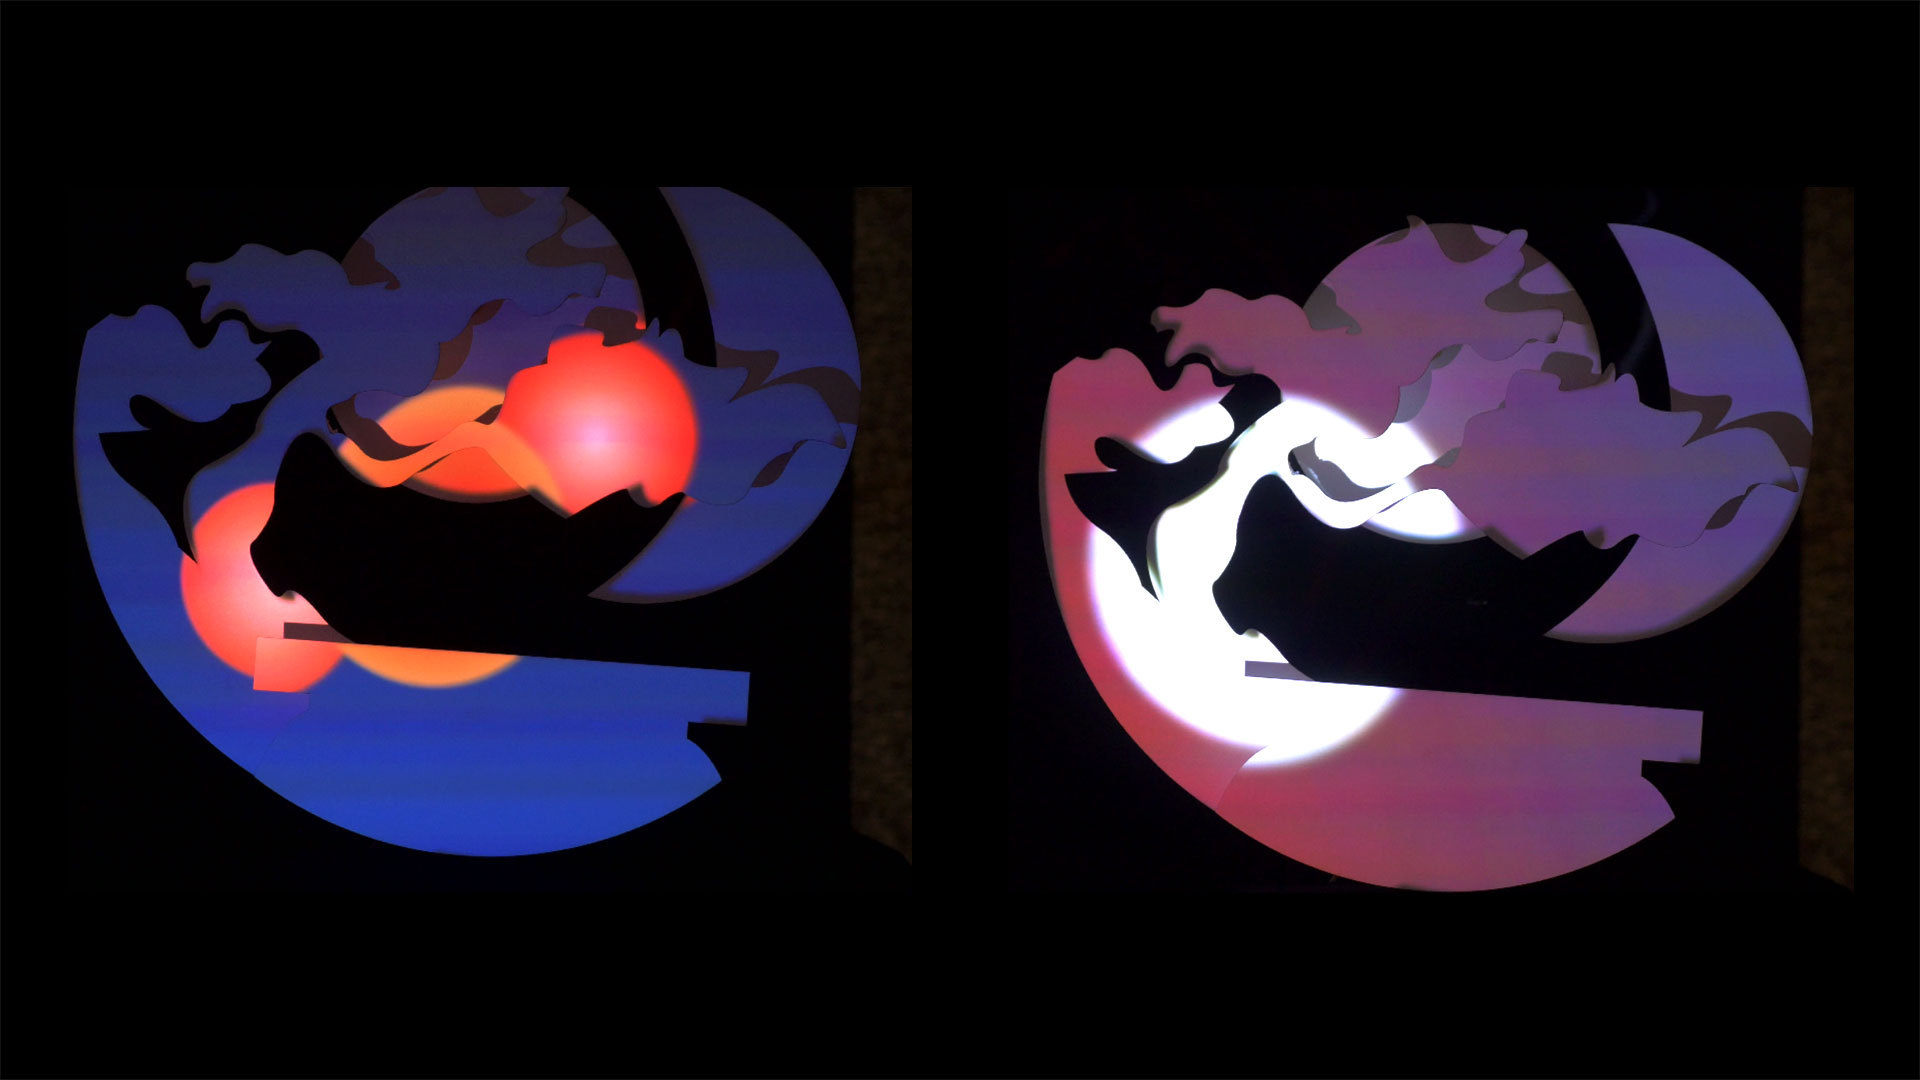 animation 2d mapping conte coreen frere lune soeur soleil laura francois